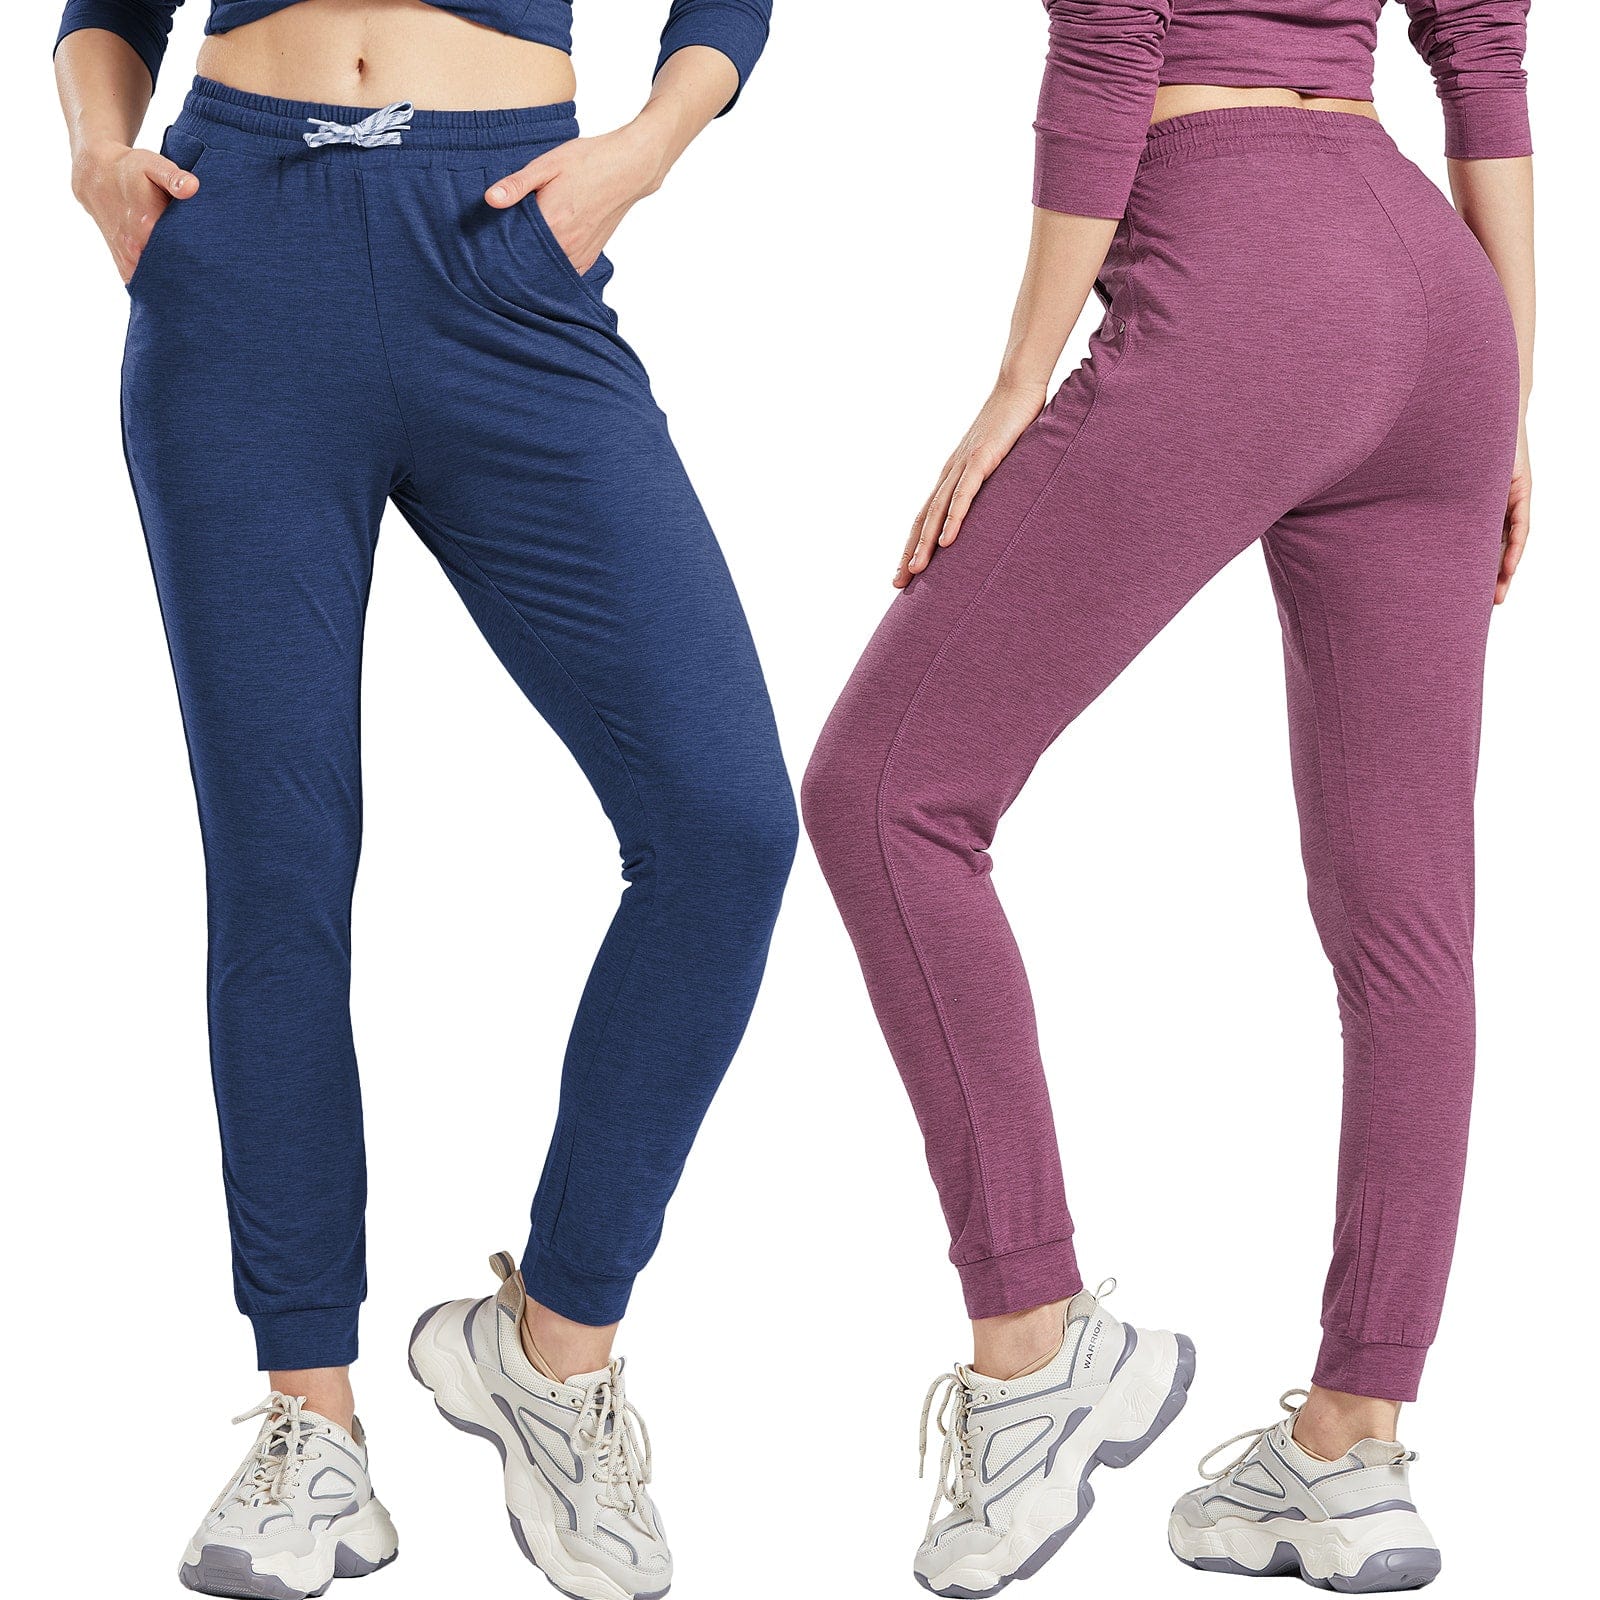 Women's Ultra-soft Workout Sweatpants Joggers with Pockets Women's Train & Active Pants Navy Plum / S MIER